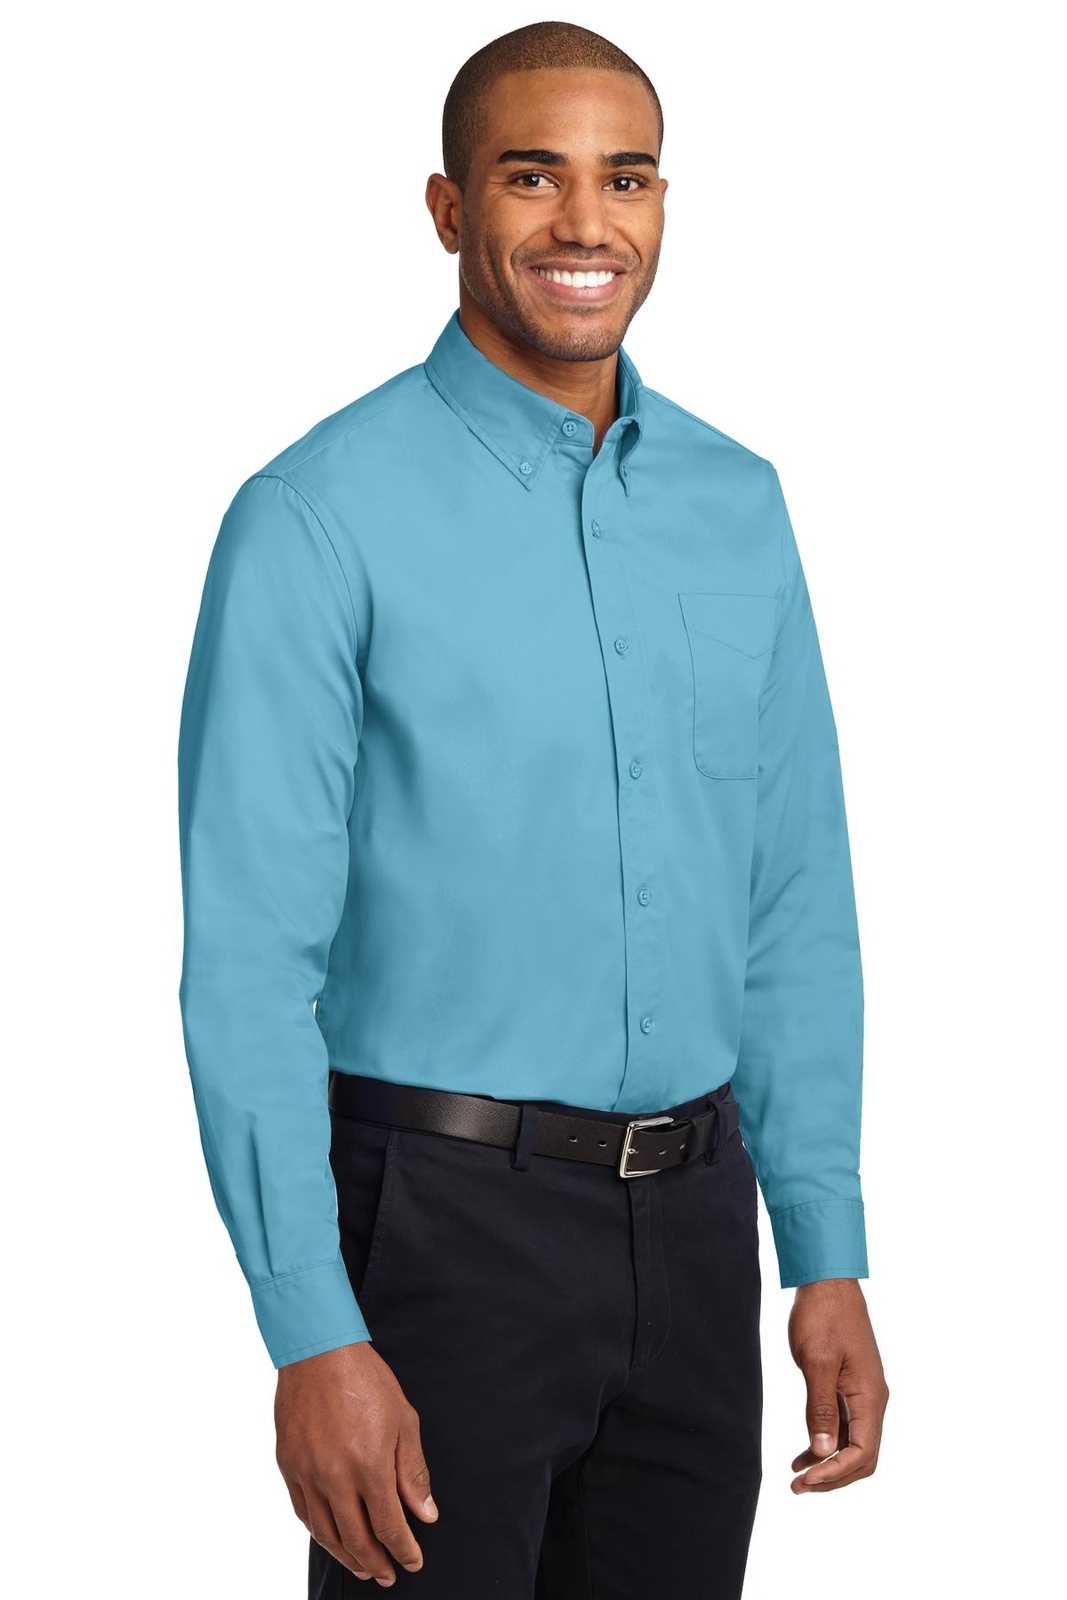 Port Authority S608 Long Sleeve Easy Care Shirt - Maui Blue - HIT a Double - 4